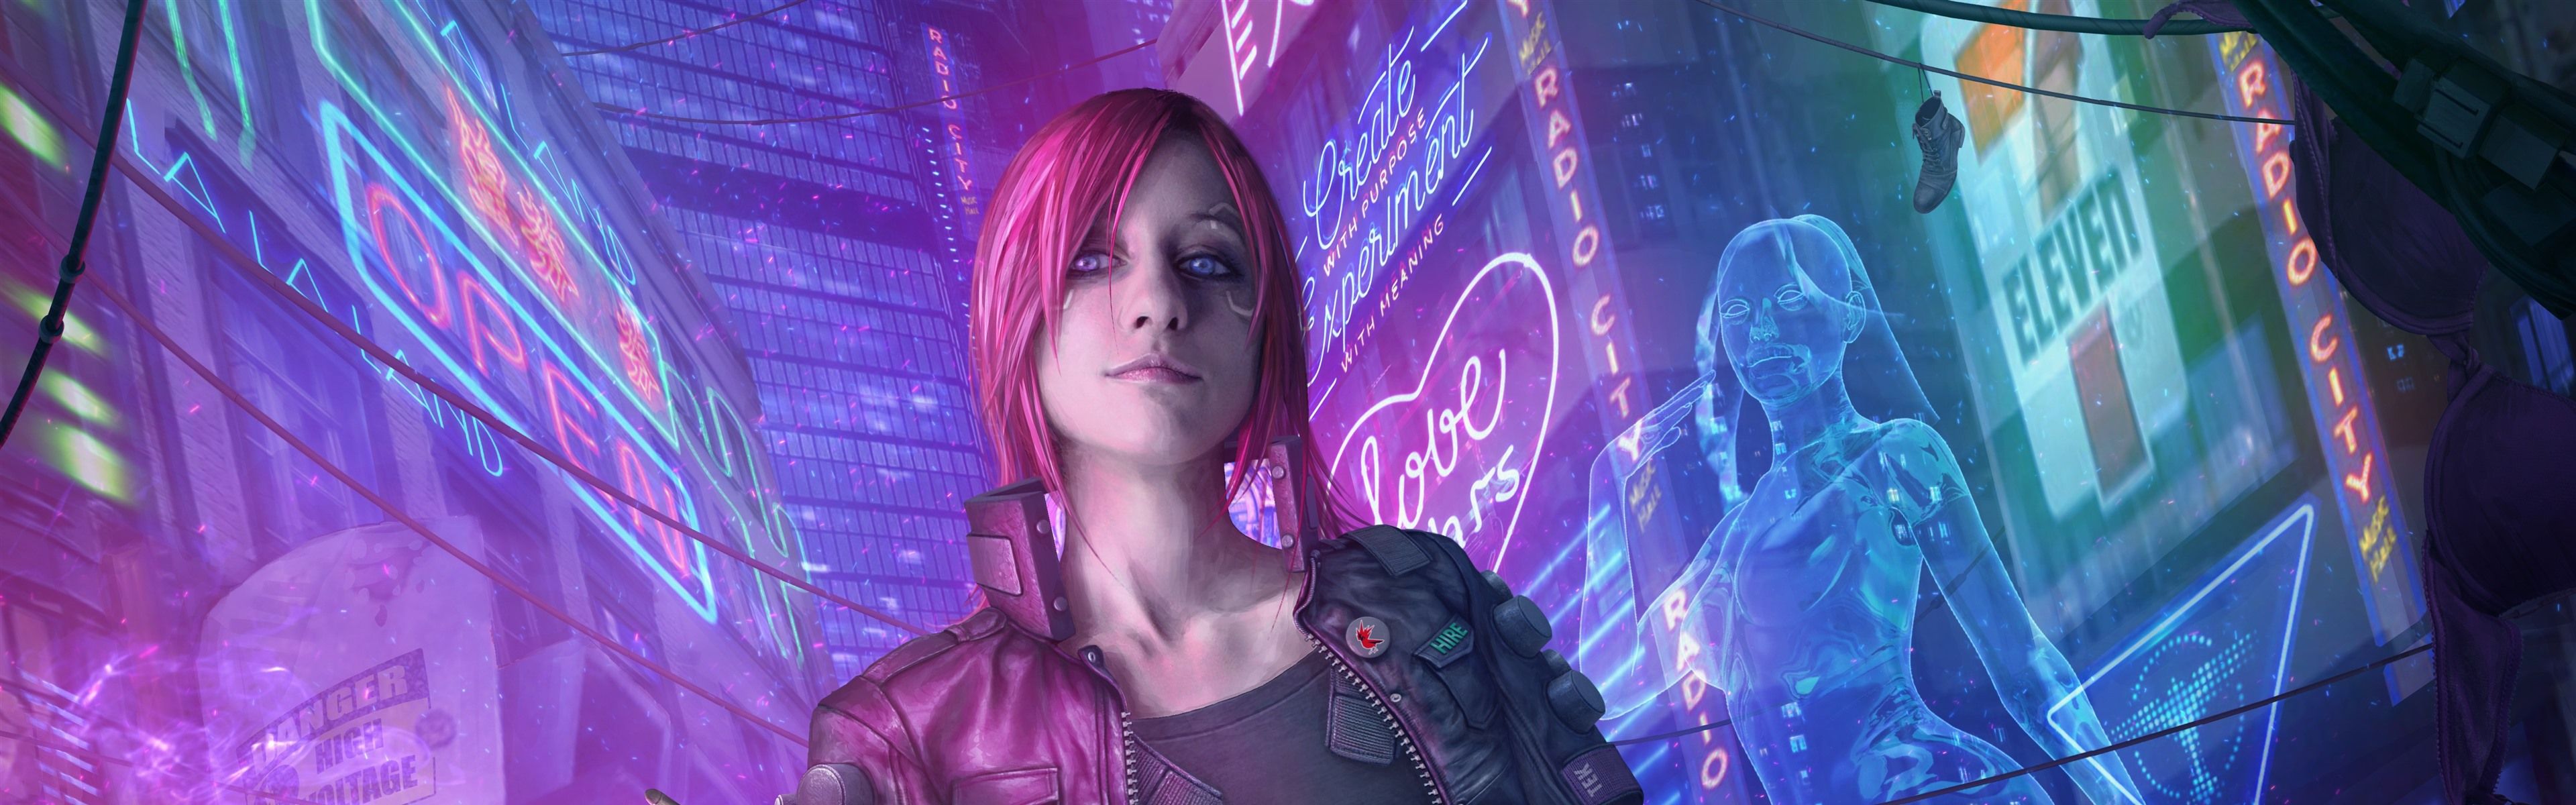 Cyberpunk Pink Hair Girl, Gun, City 1242x2688 IPhone 11 Pro XS Max Wallpaper, Background, Picture, Image